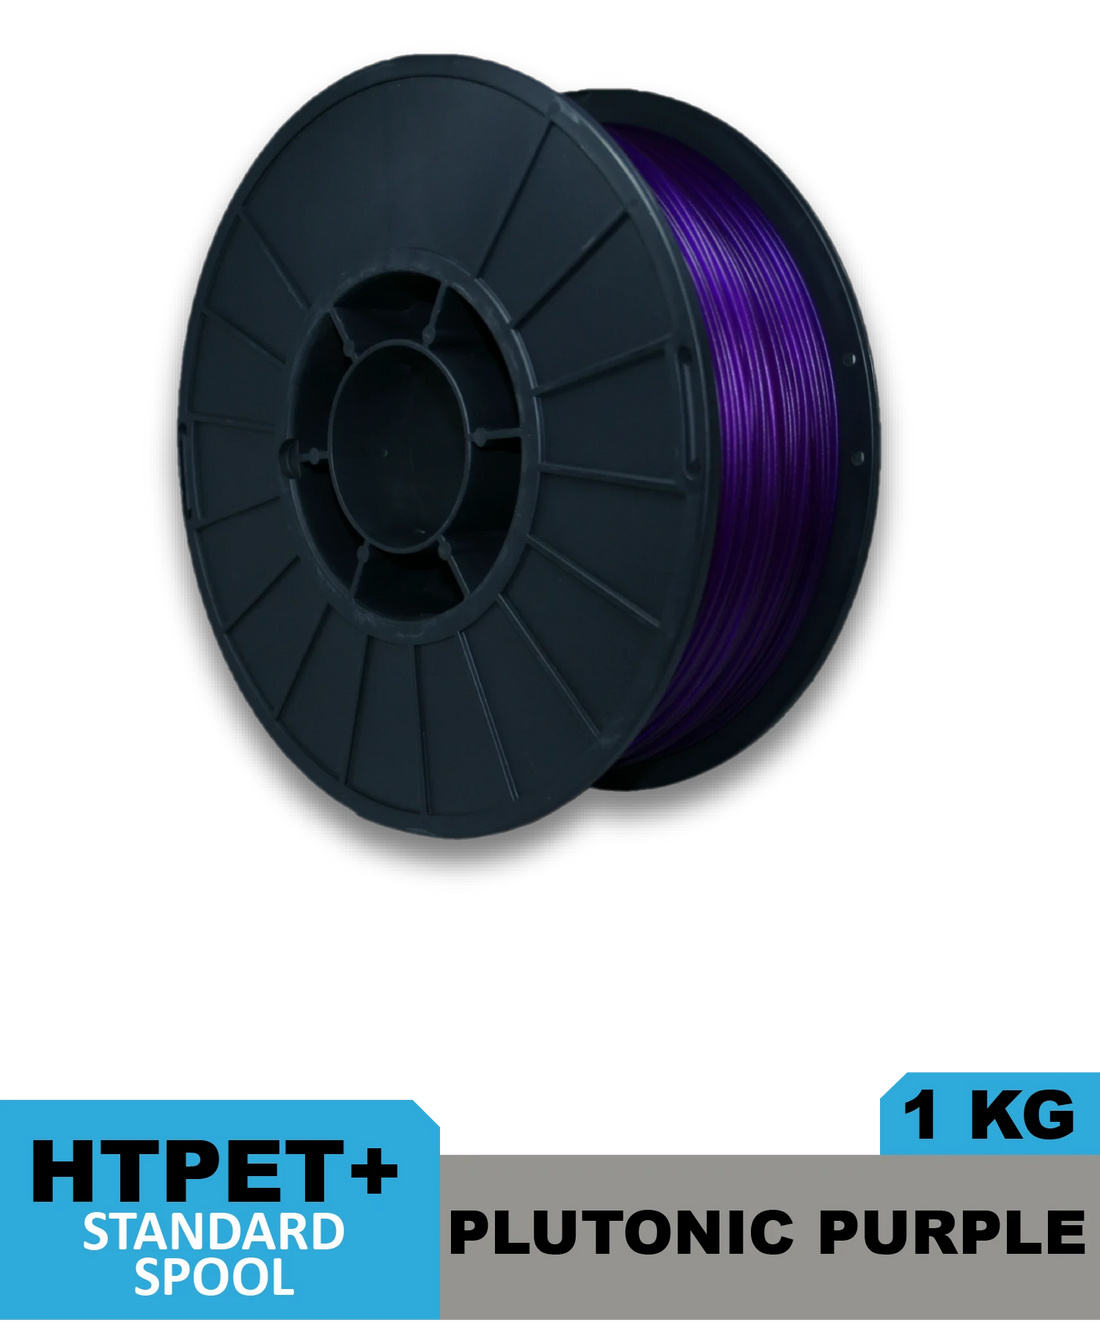 HTPET - Plutonic Purple